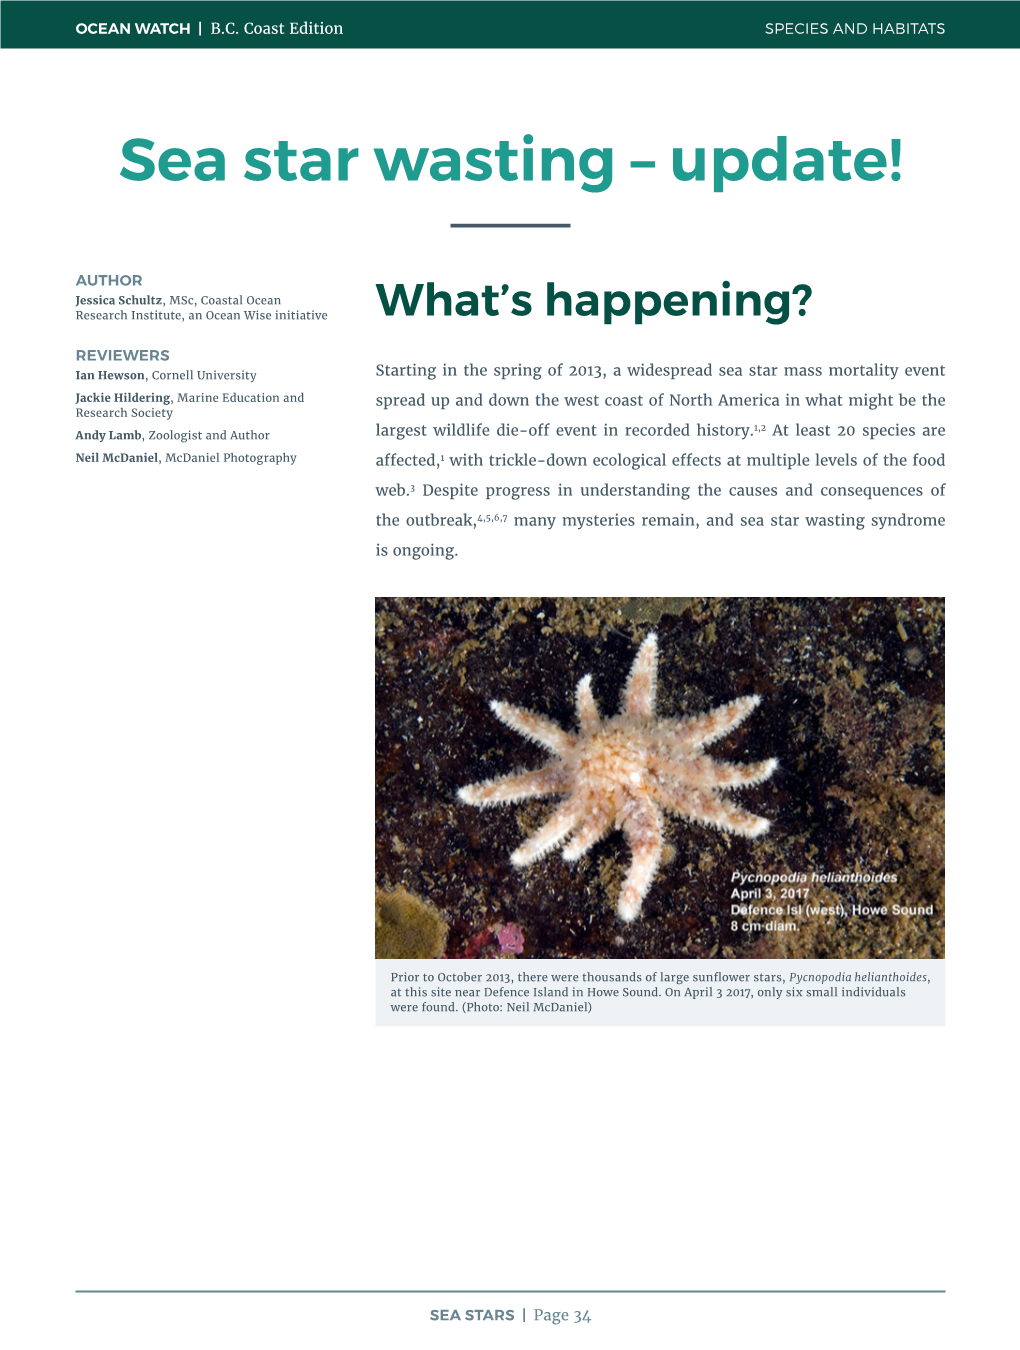 Sea Star Wasting – Update!